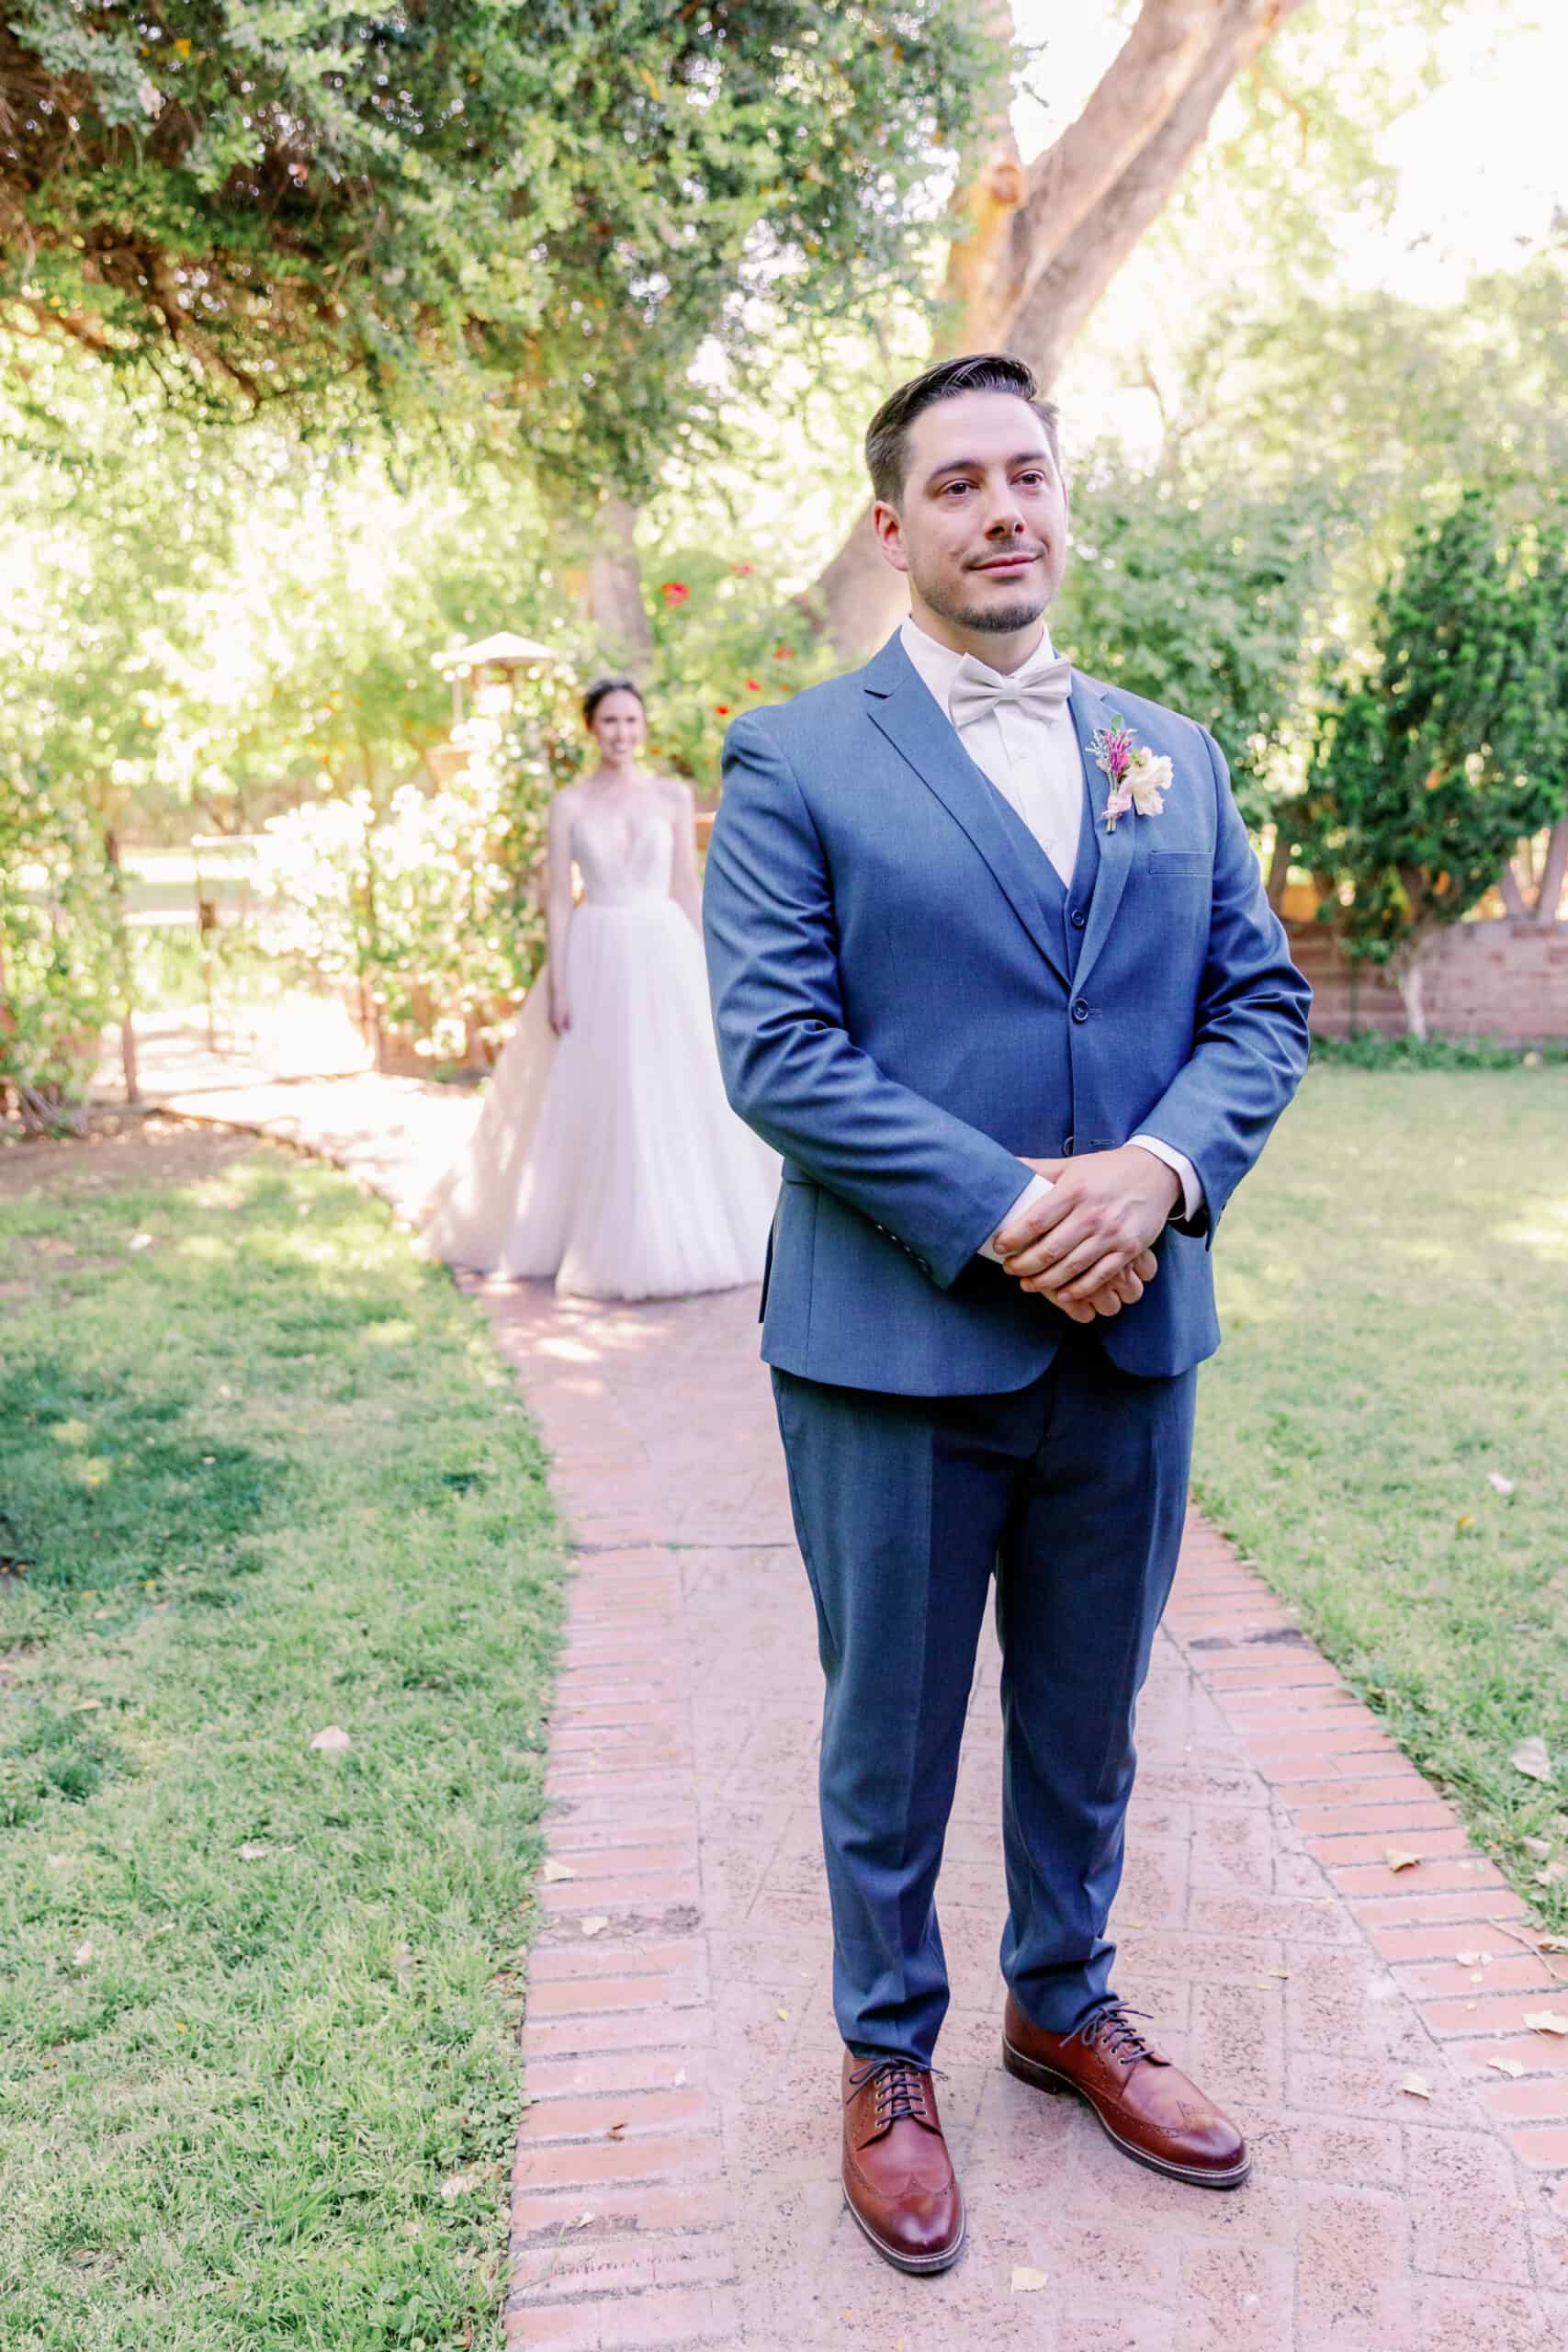 First Look during a wedding held in Tucson, Arizona at Agua Linda Farm